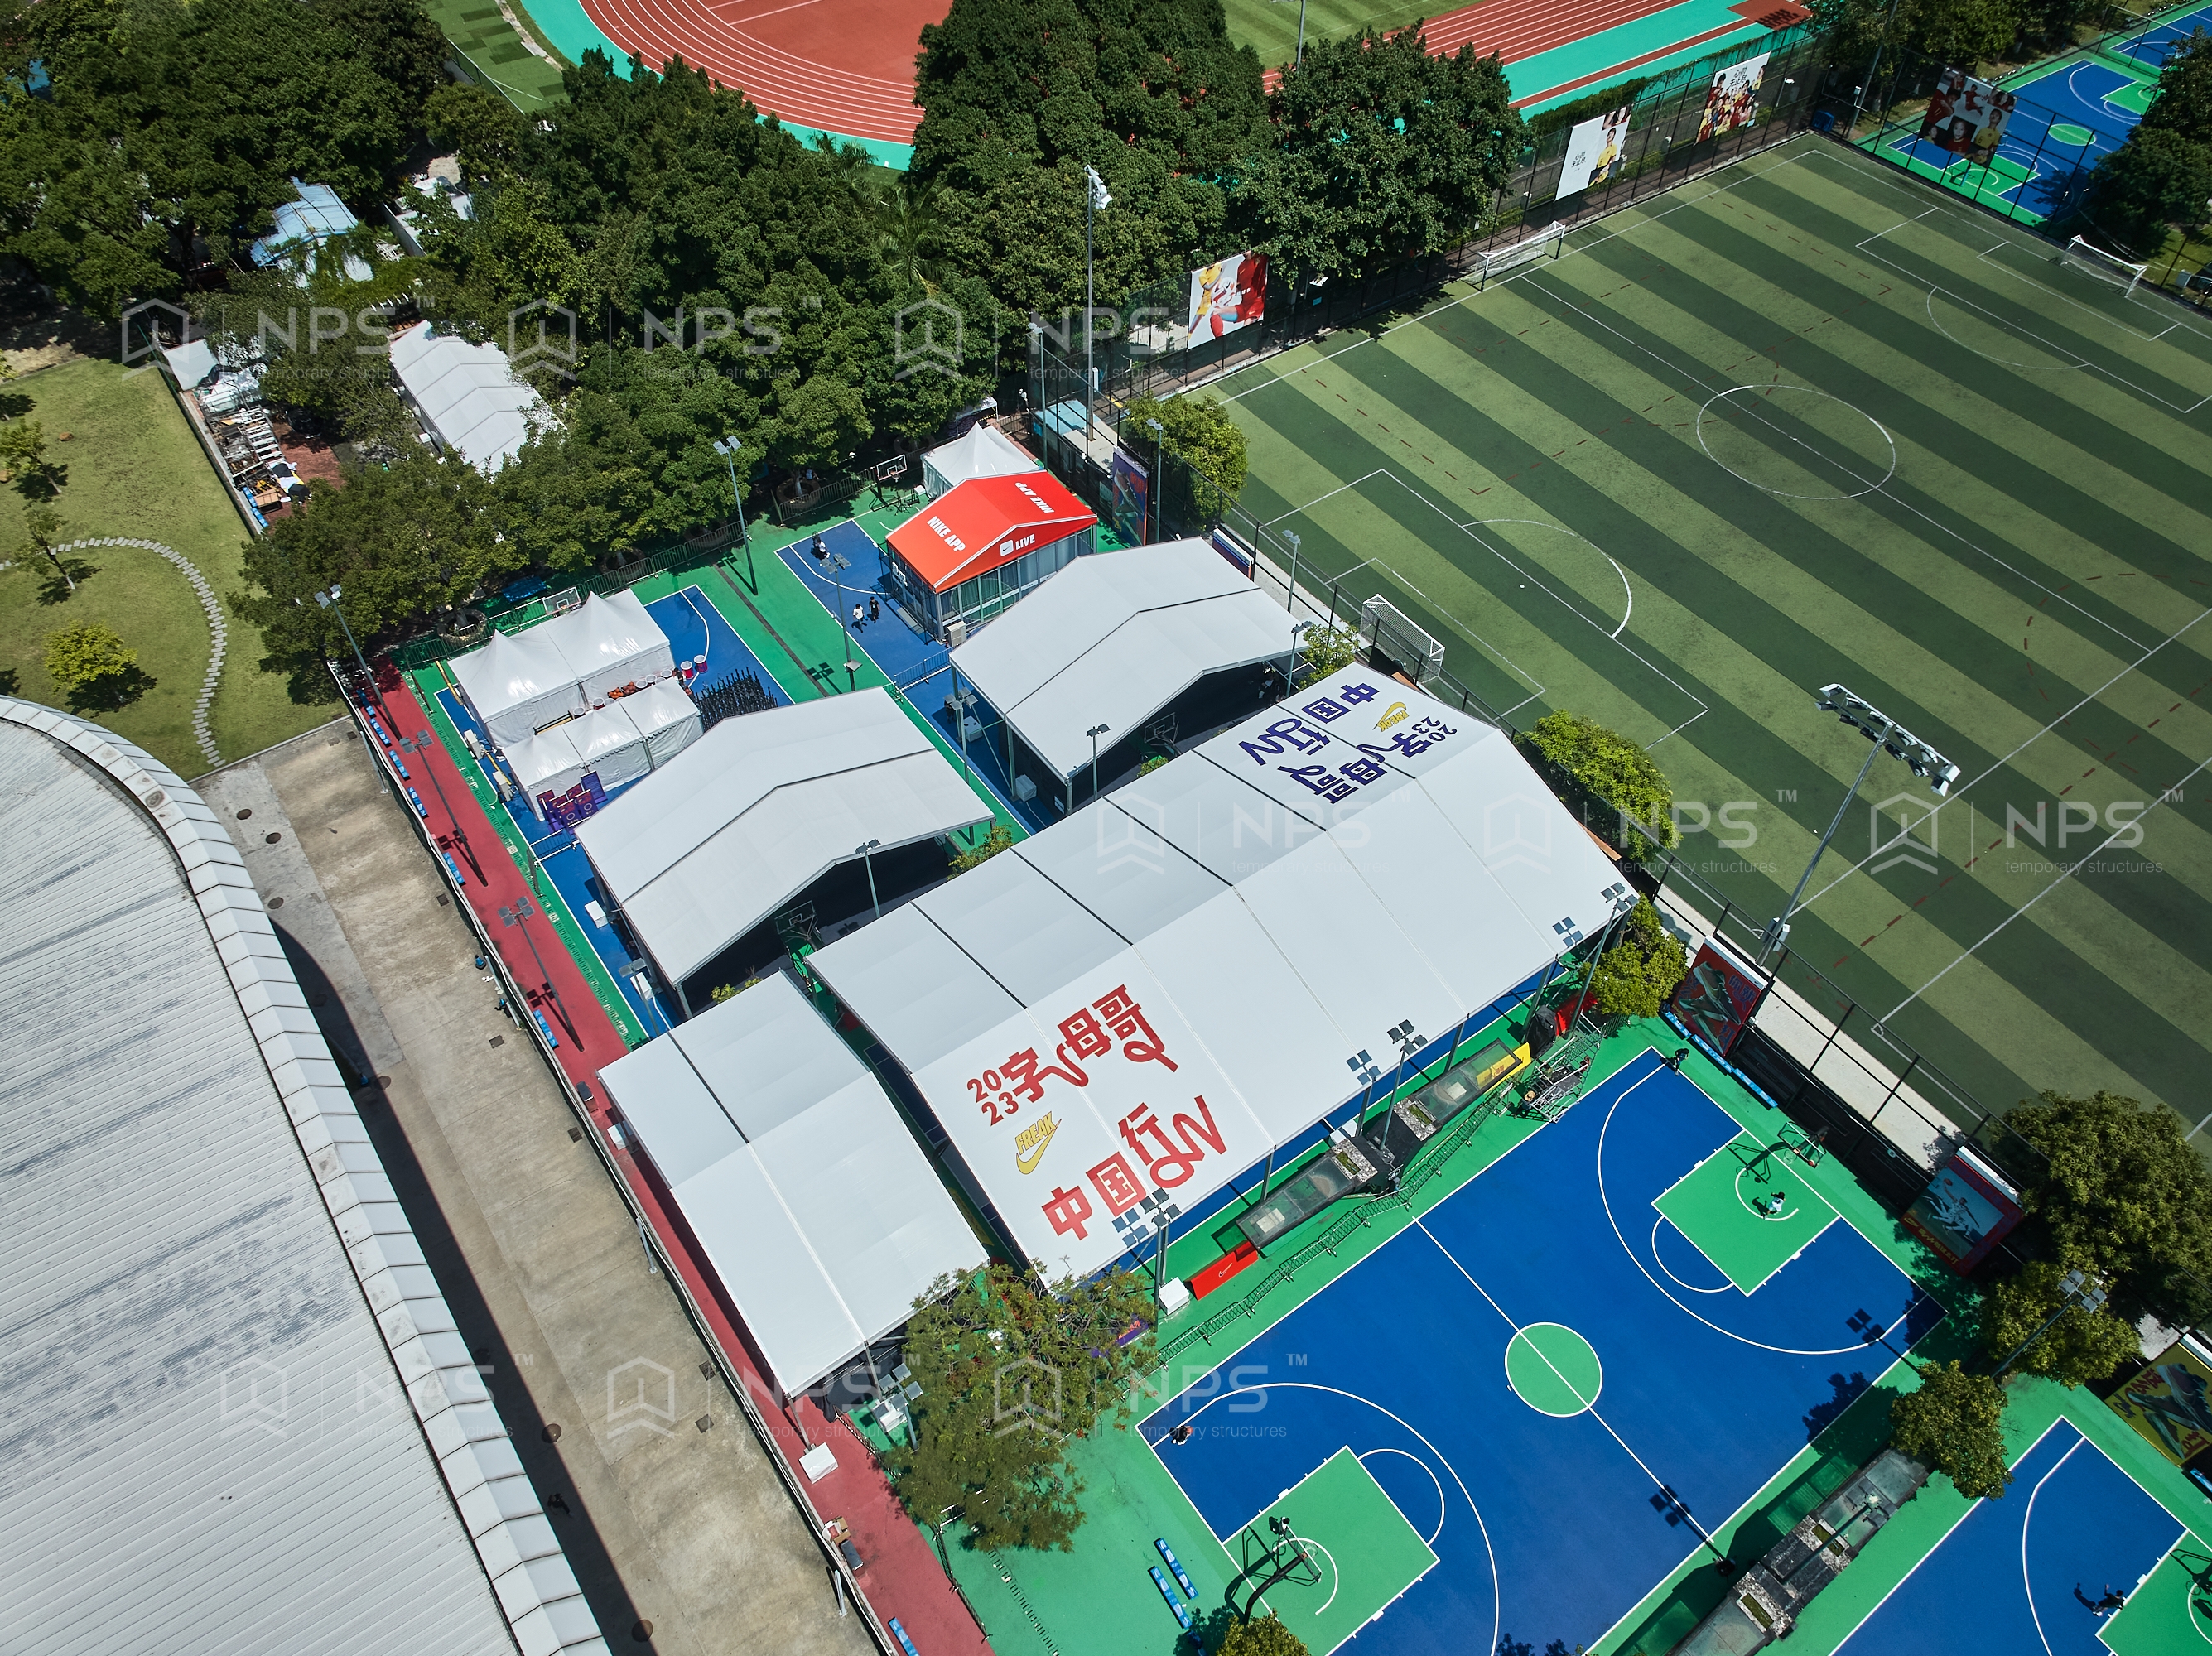 2023NBA字母哥中国行，NPS奈柏可移动建筑为其提供高品质体育篷房-都市魅力网